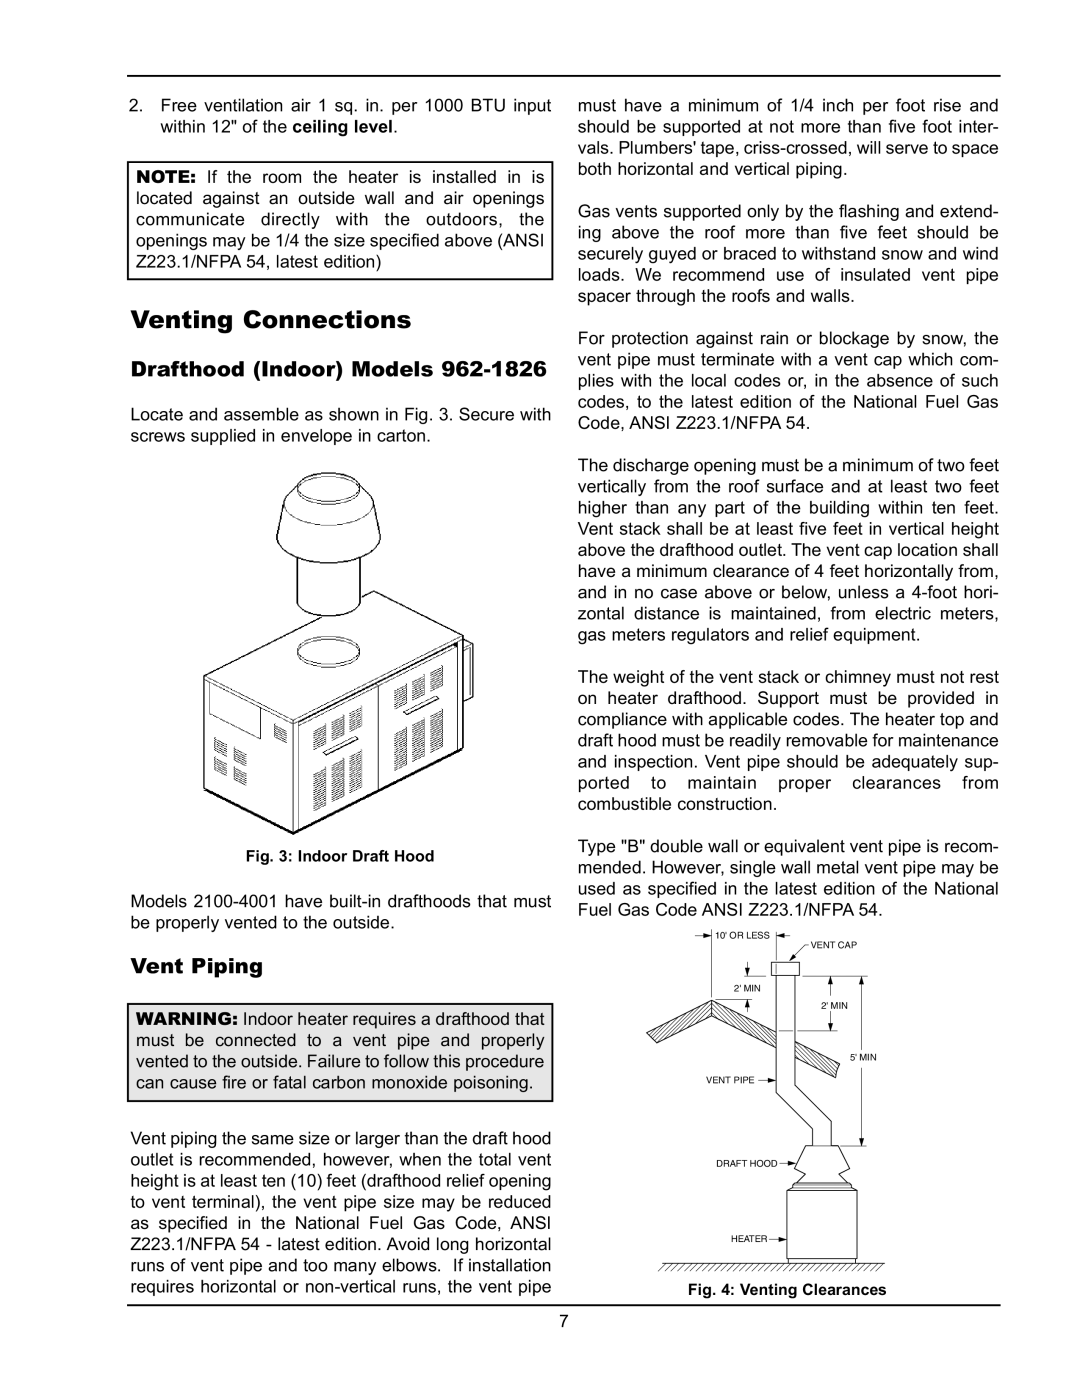 Raypak P-2100, P-1826, P-4001, P-926 manual Venting Connections, Drafthood Indoor Models, Vent Piping 